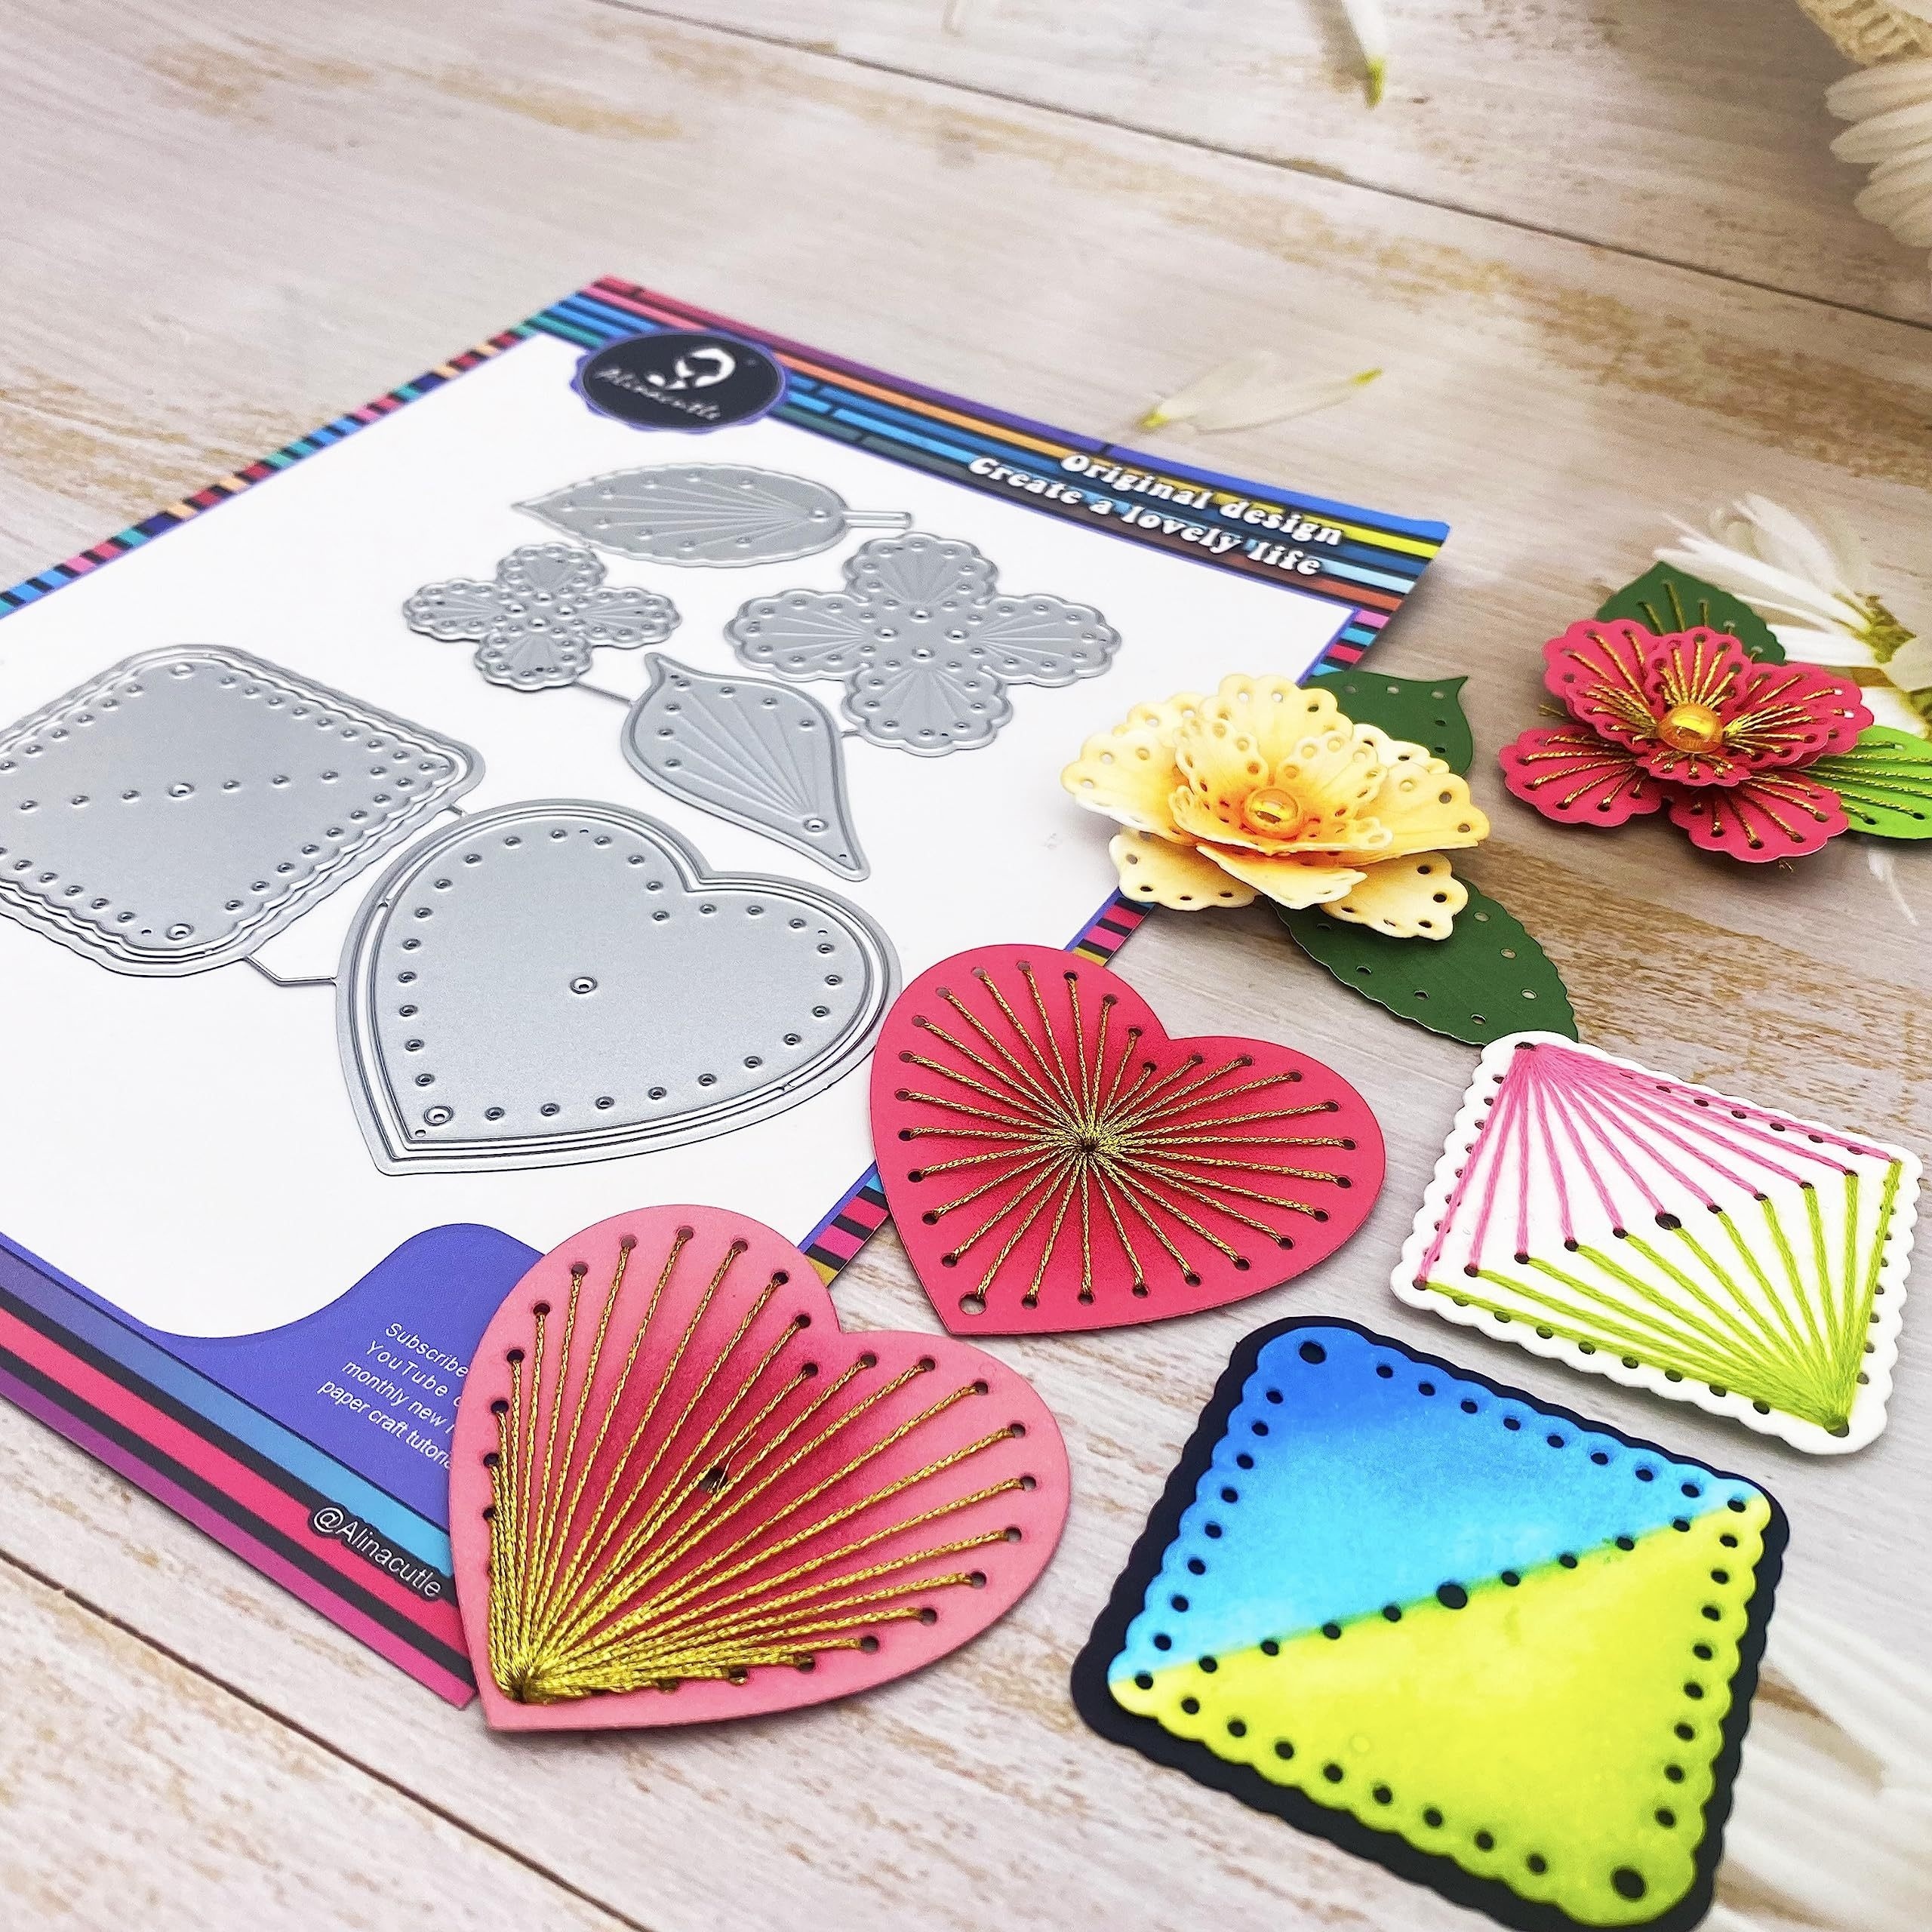 Die Cut Felt Shapes 18 Designs Card Making Crafts - Heart Flower